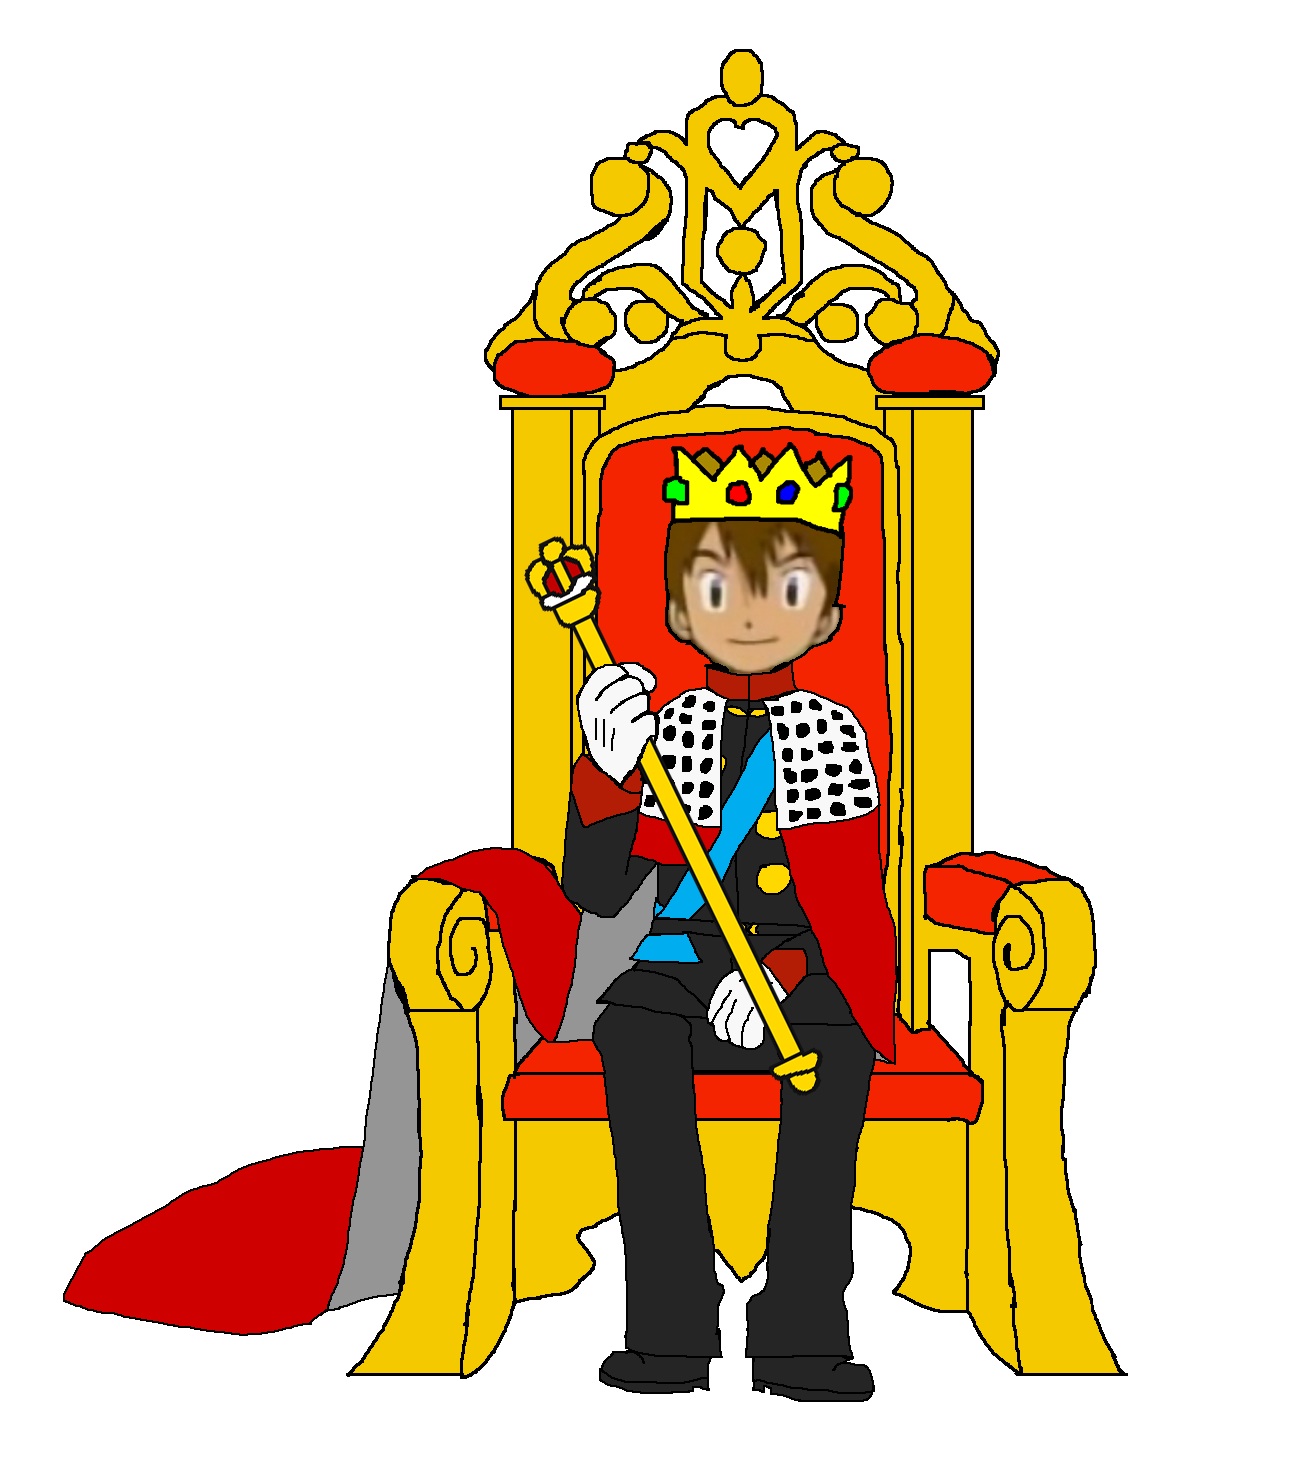 Clipart Of Kings. King clipar